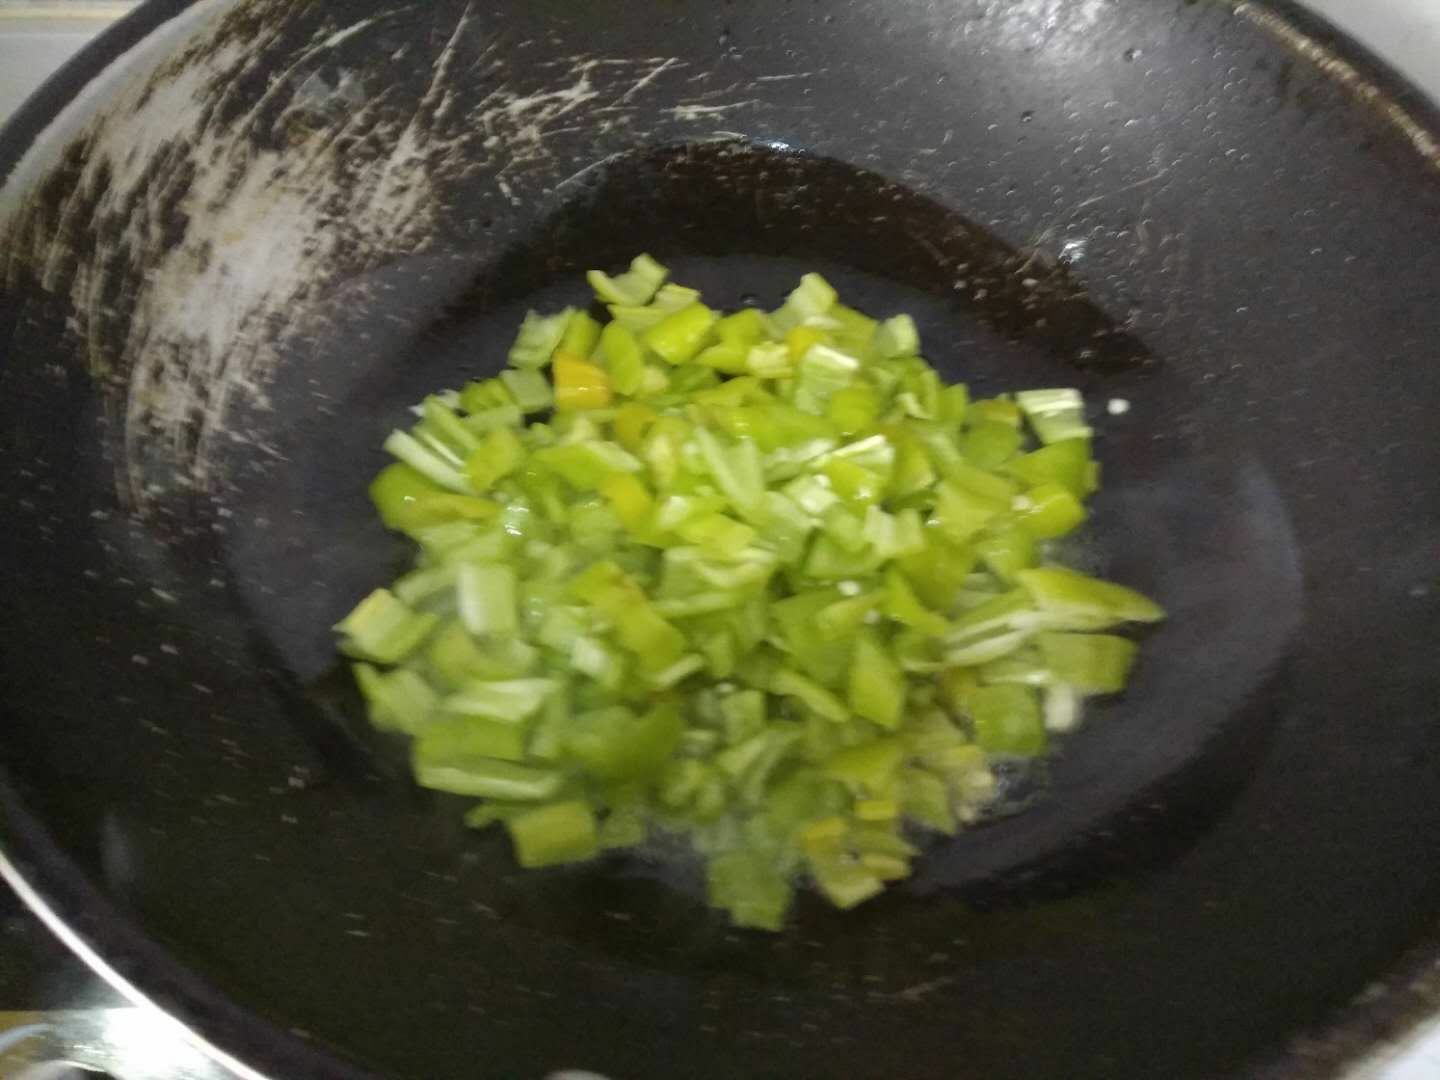 Fried Chili with Snow Peas recipe